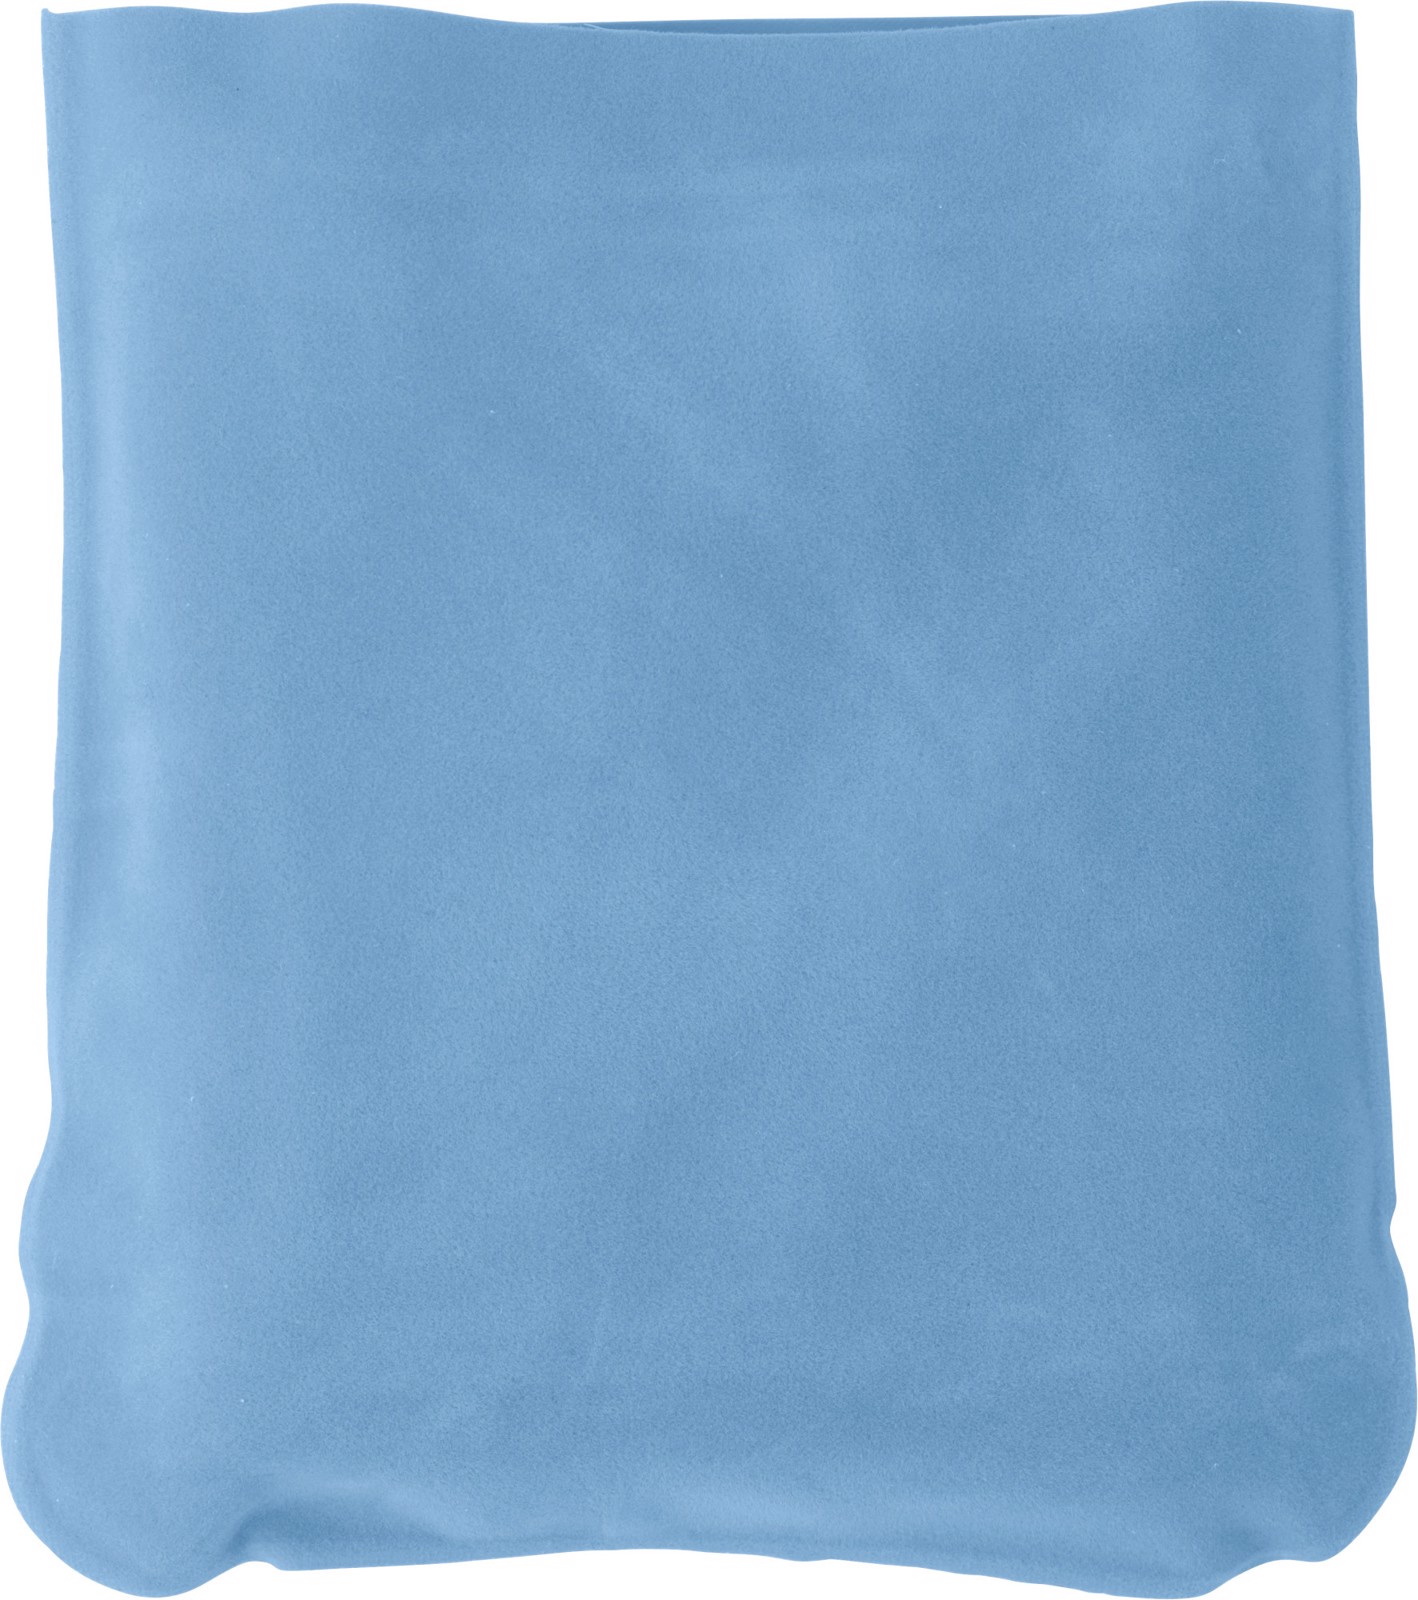 Velour travel cushion - Light Blue